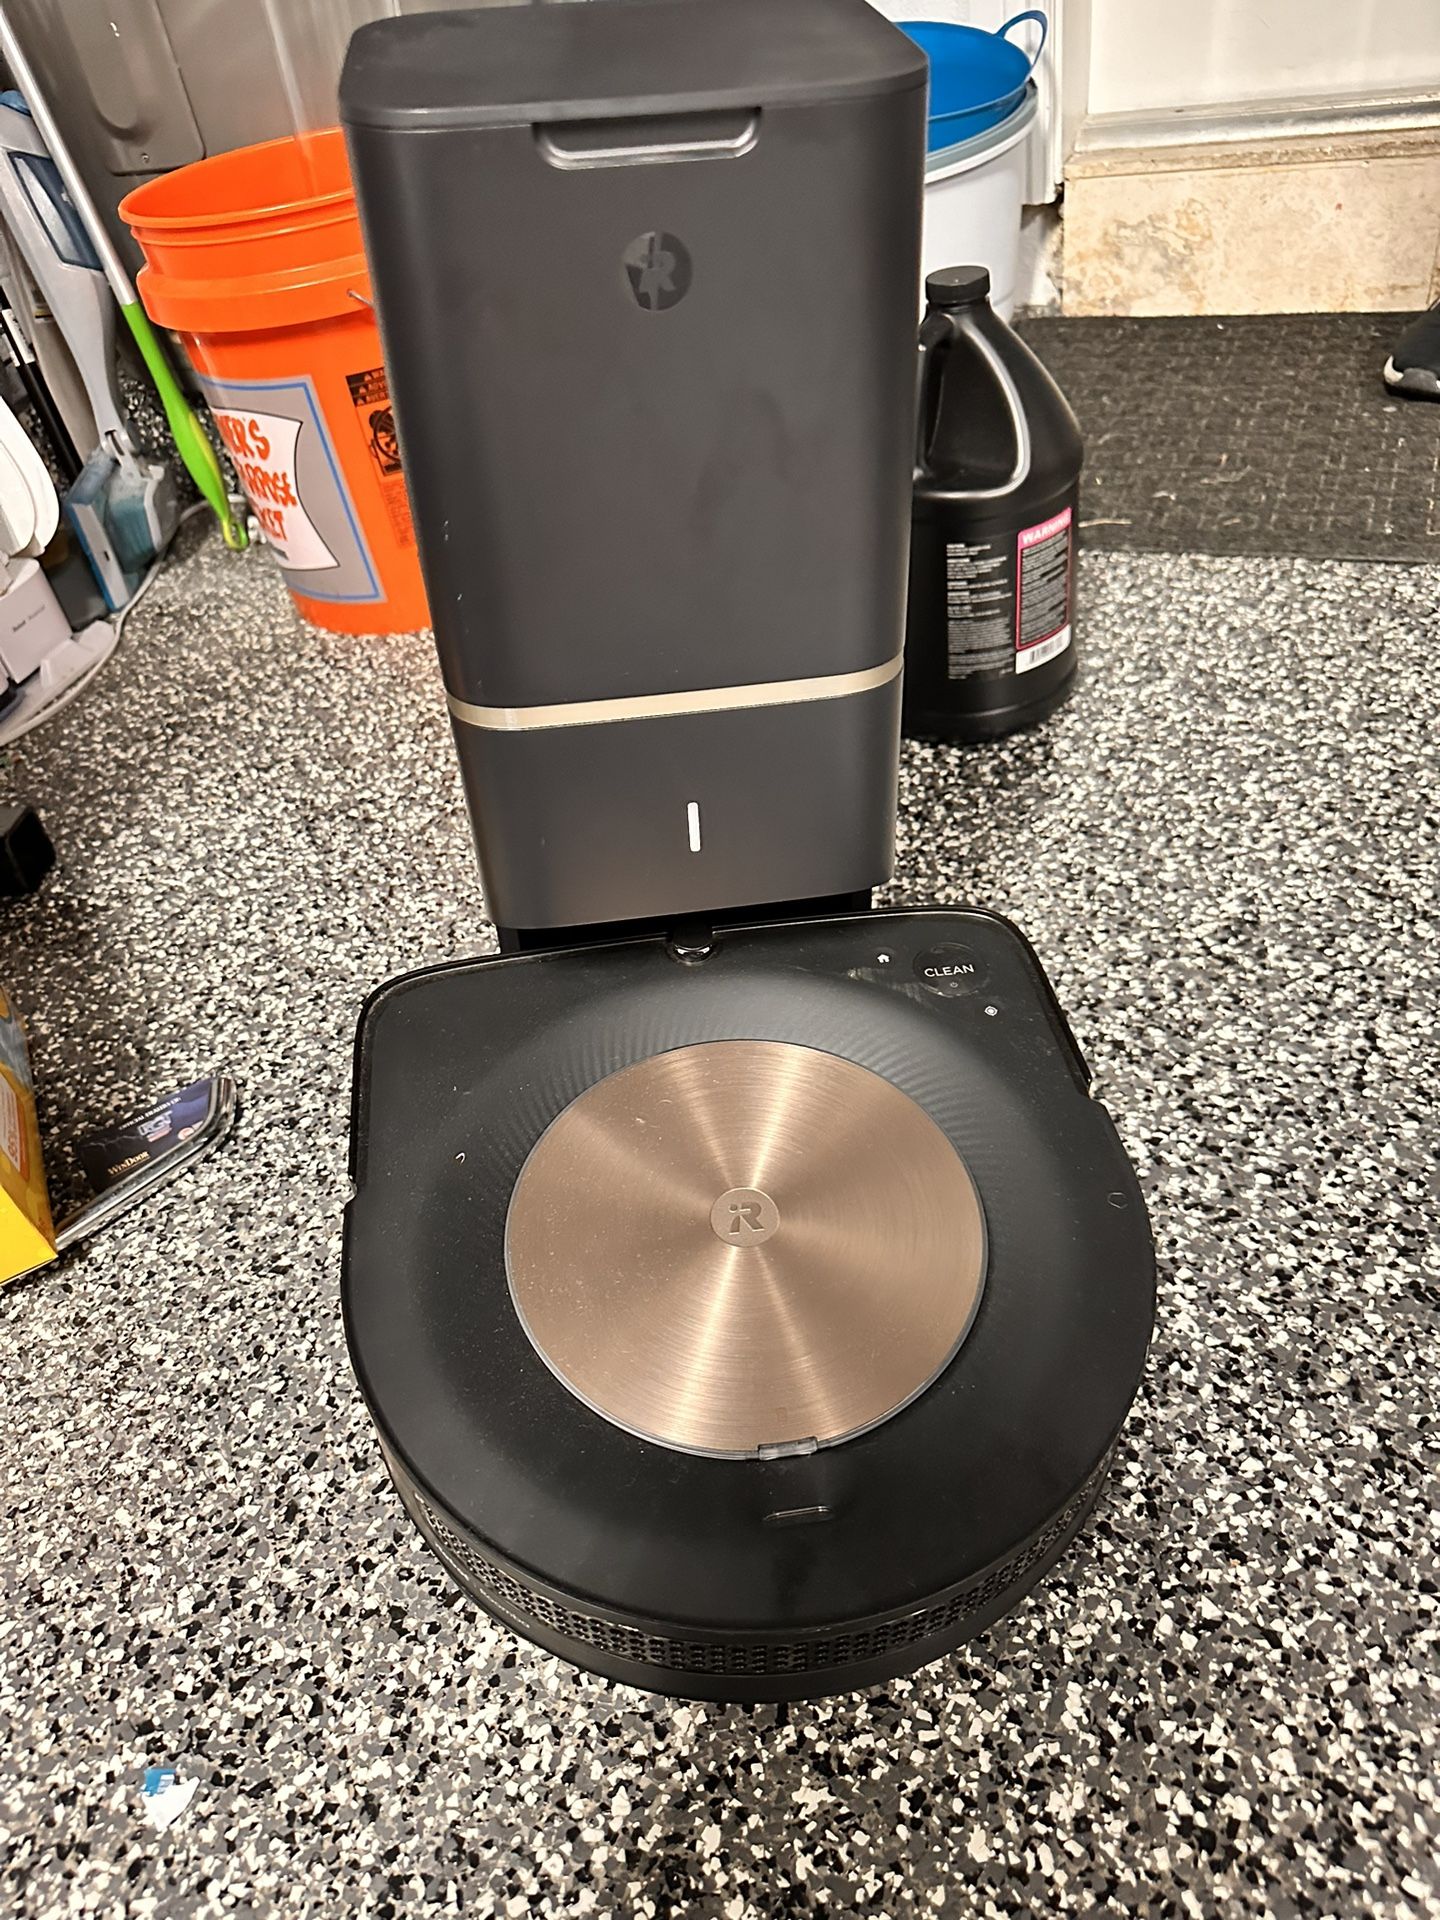 I Robot Roomba Vacuum 